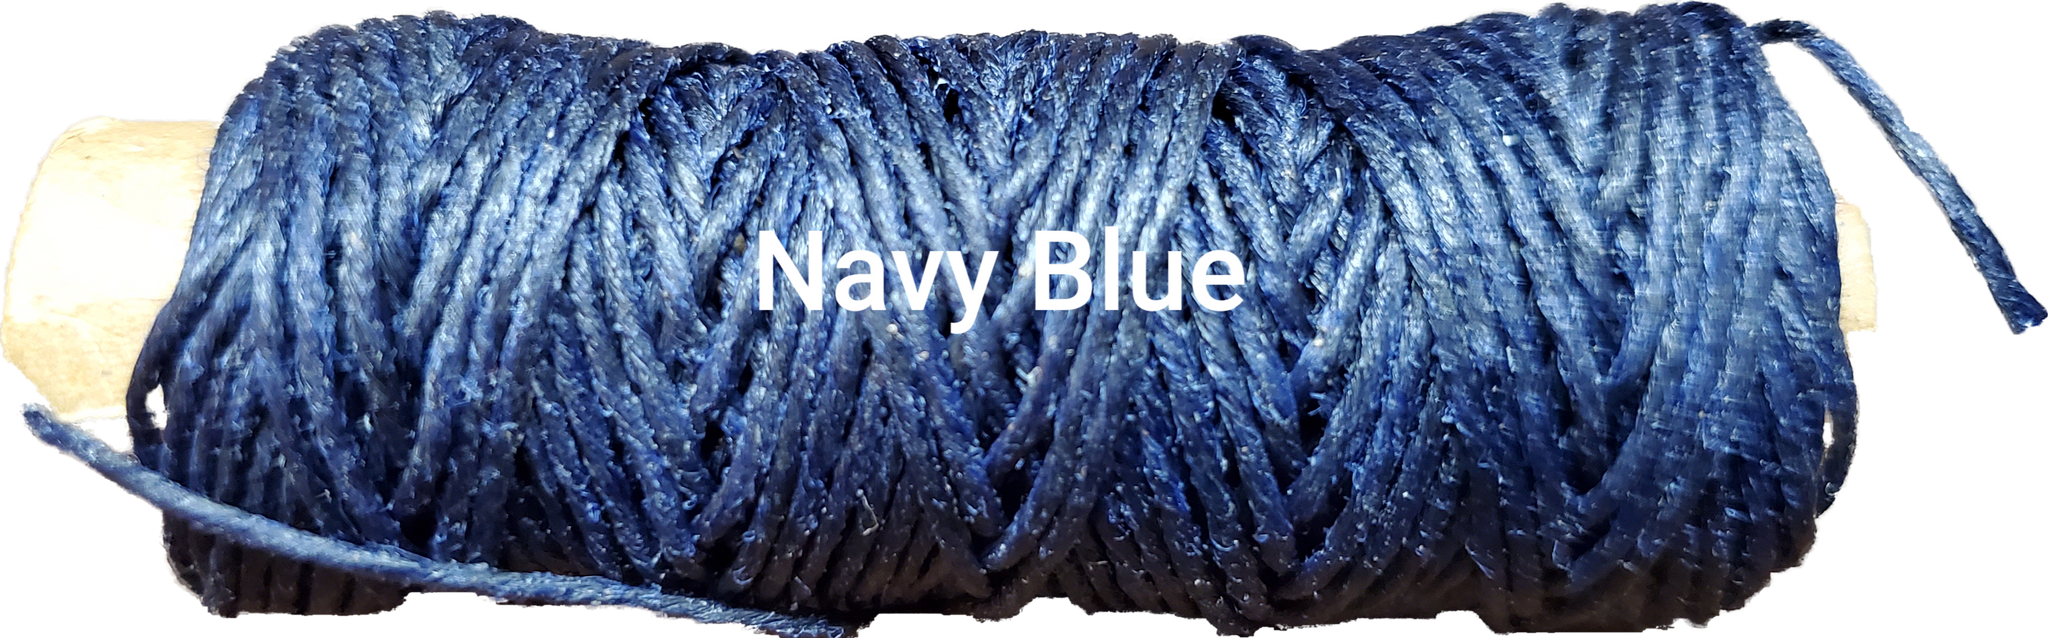 Maine Thread, Twisted Waxed Cord, 70 yard spool, Marina Blue